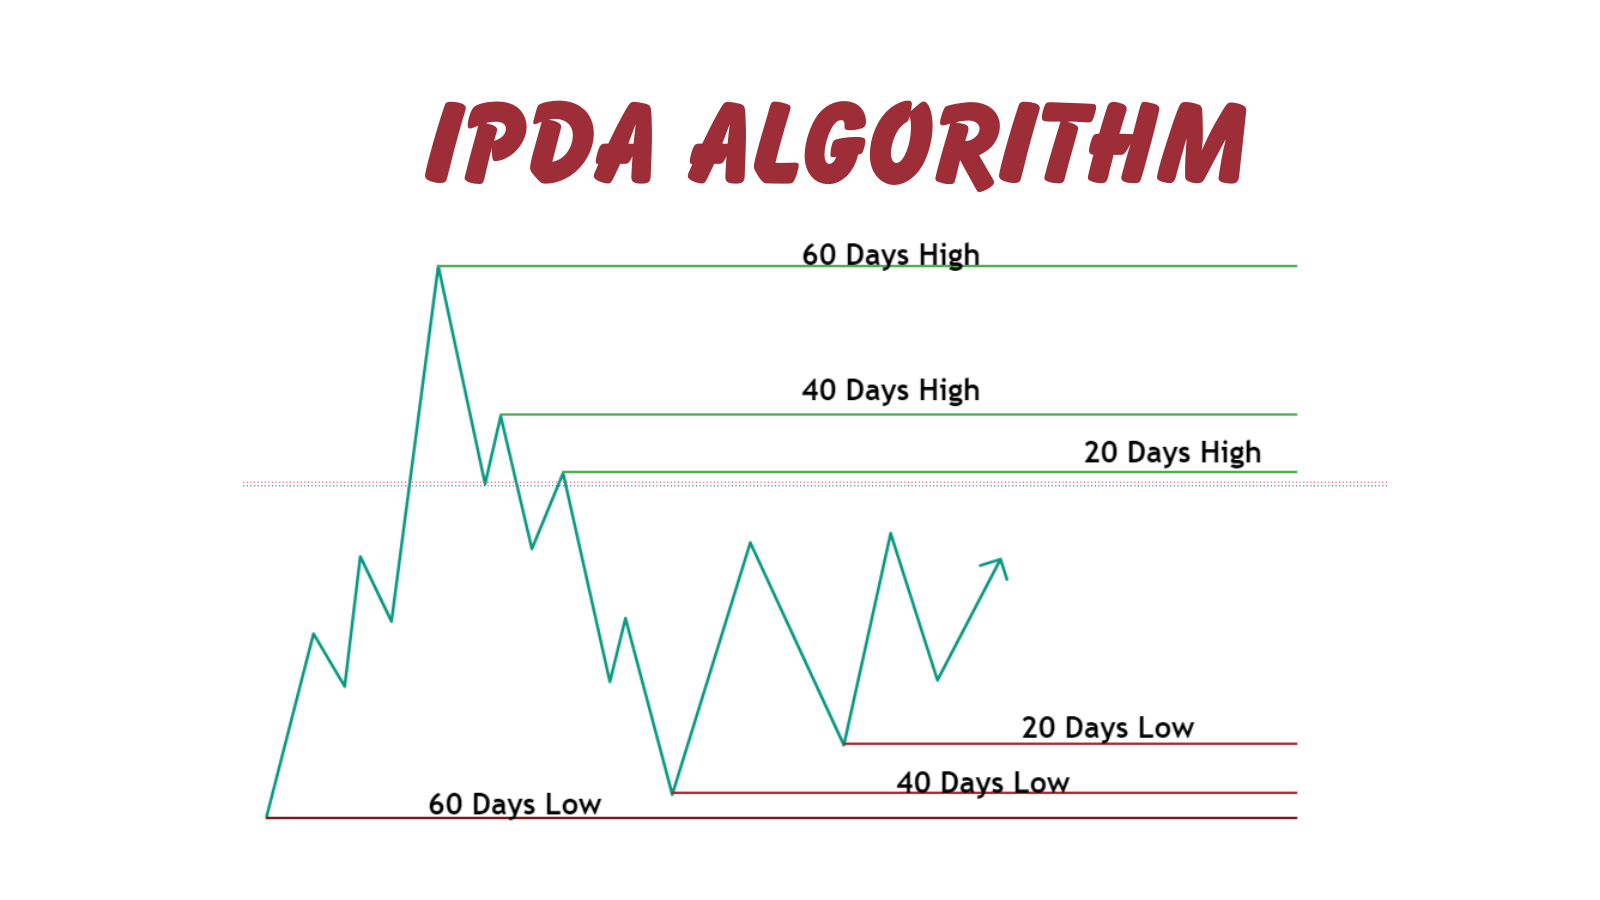 What is IPDA algorithm